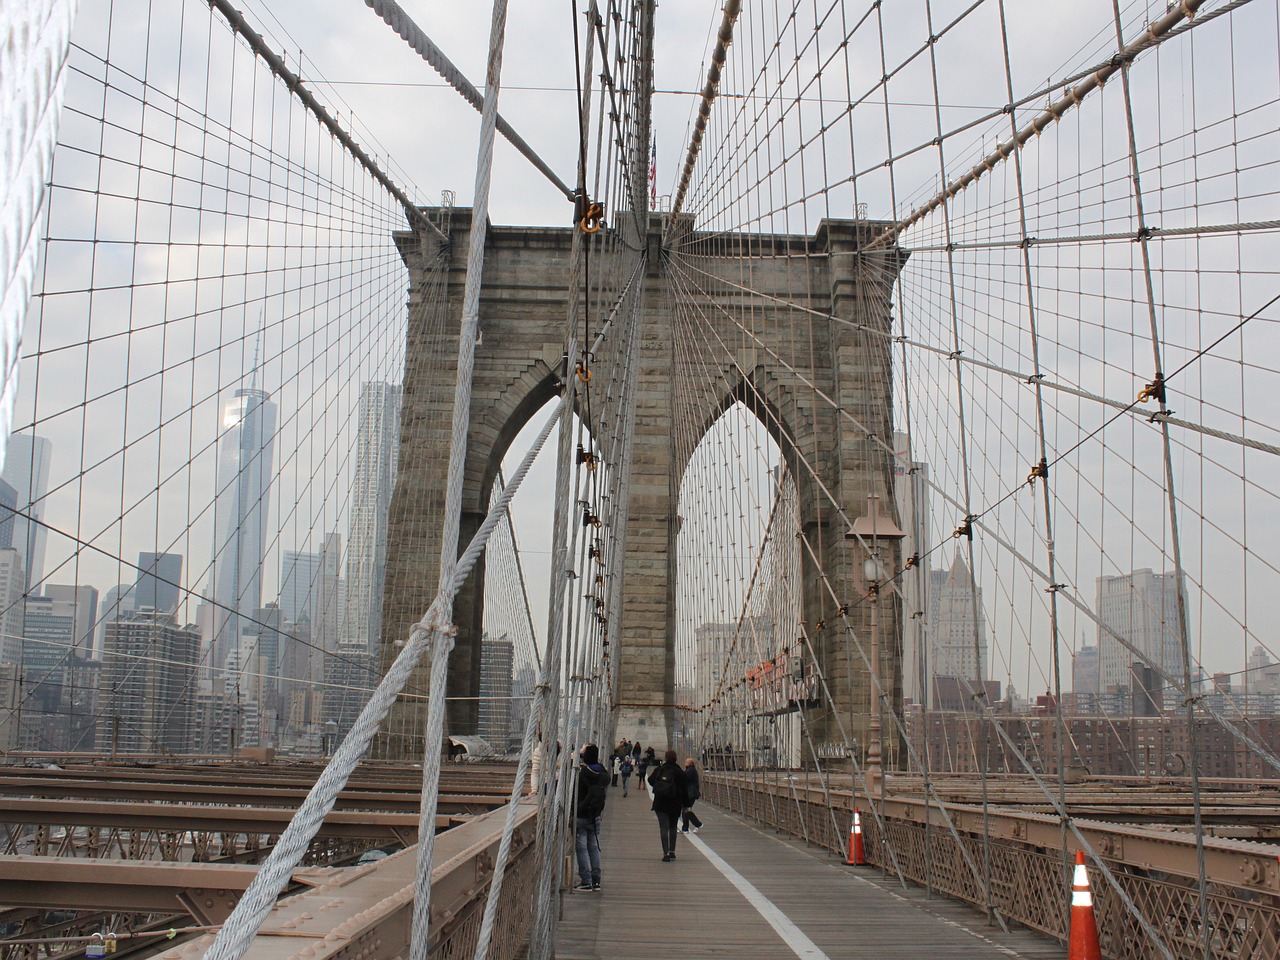 They the new bridge. Висячий мост в Нью-Йорке. Бруклинский мост арка. Мост на тросах в Америке. Бруклин подвесной мост.